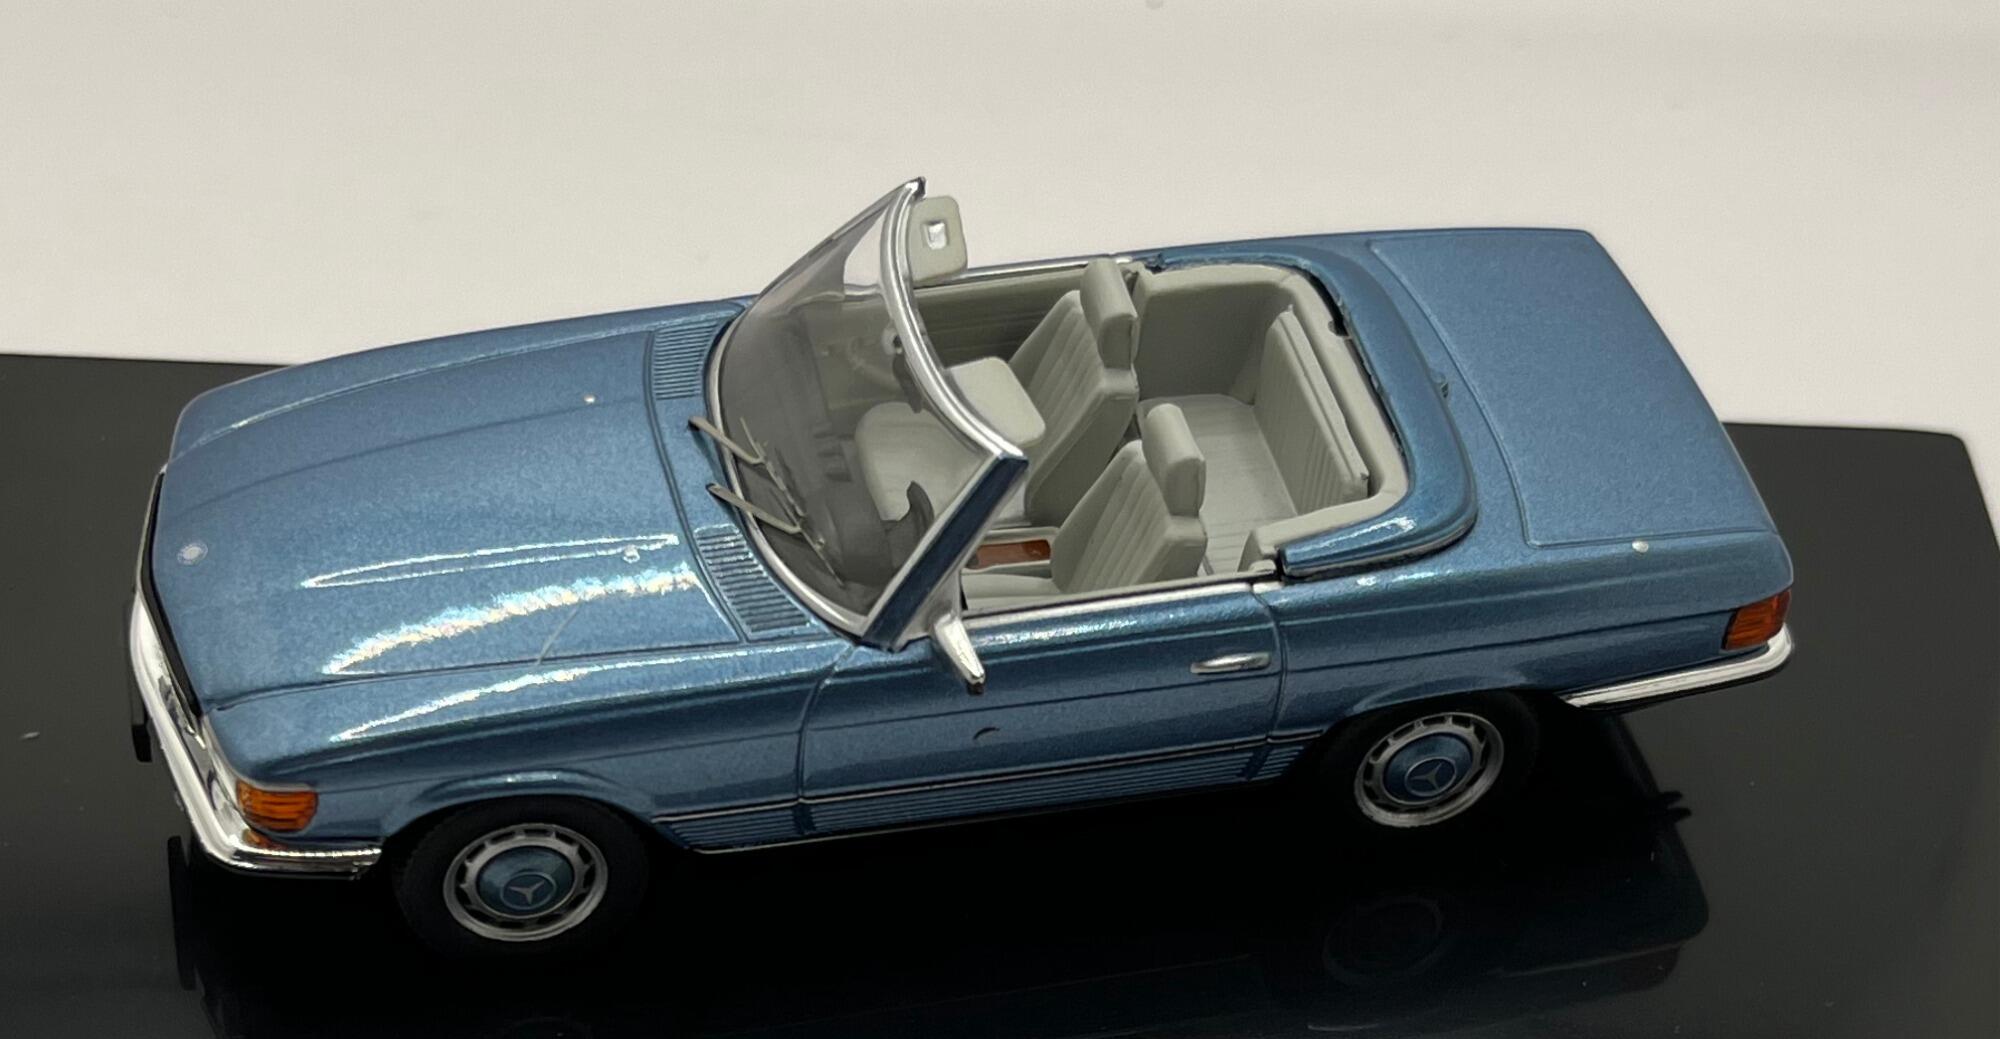 Mercedes Benz 280 SL (R107) 1979 in metallic light blue 1:43 scale diecast car model form IXO, CLC458N